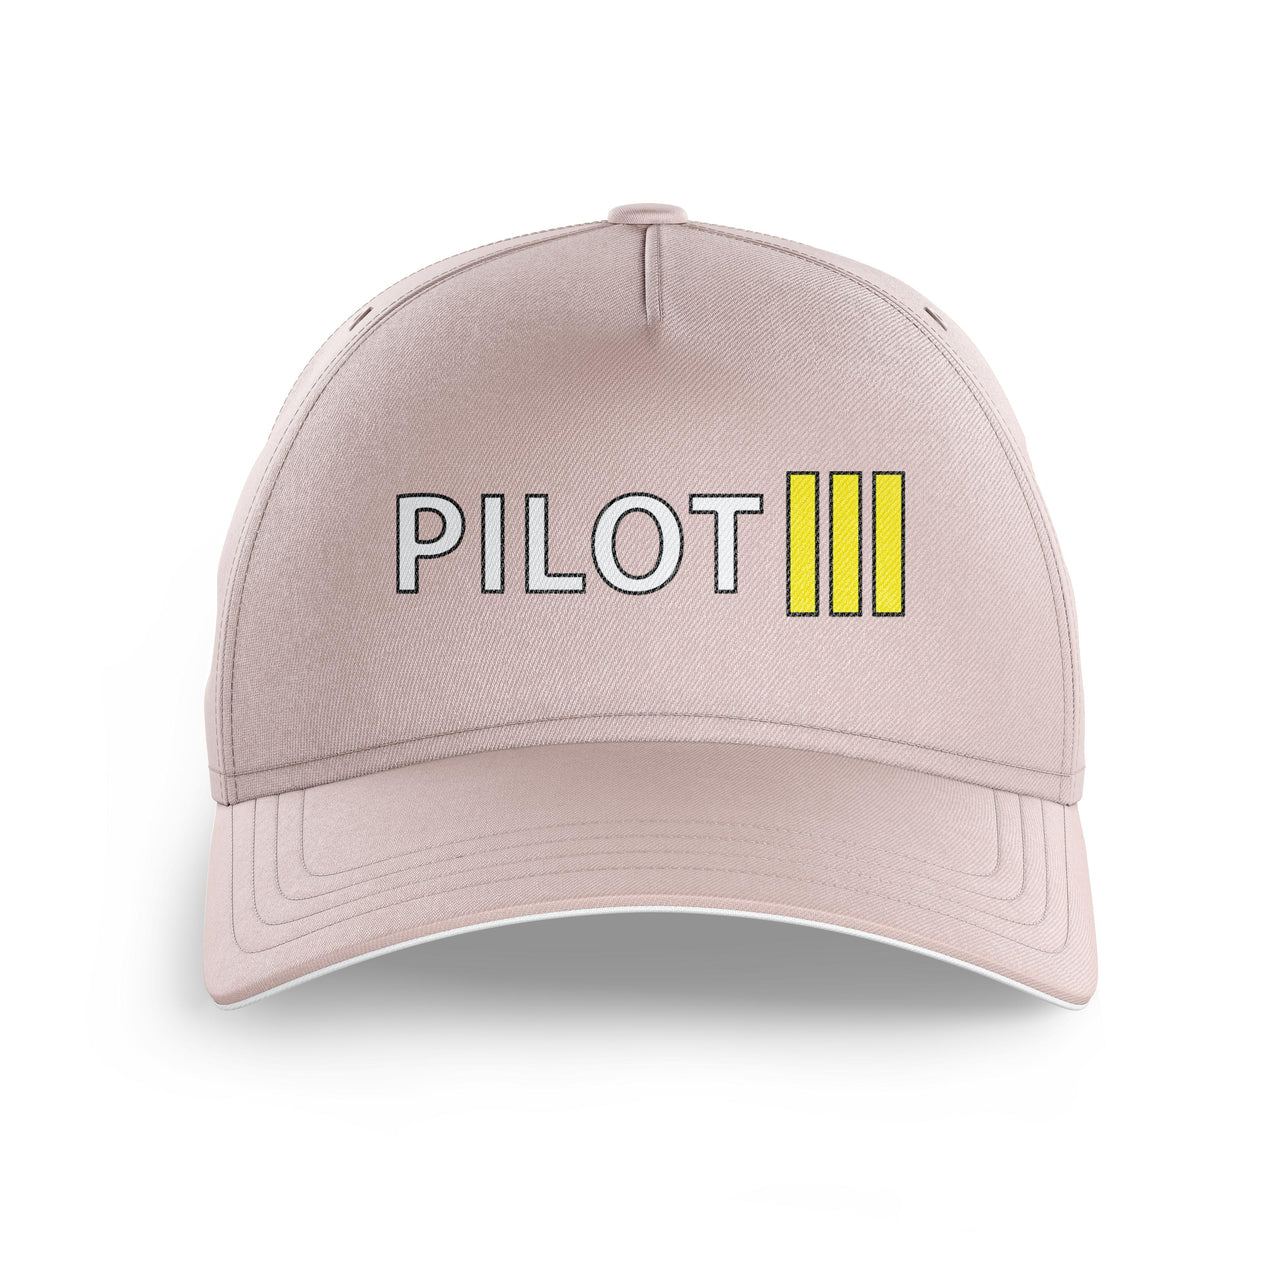 Pilot & Stripes (3 Lines) Printed Hats